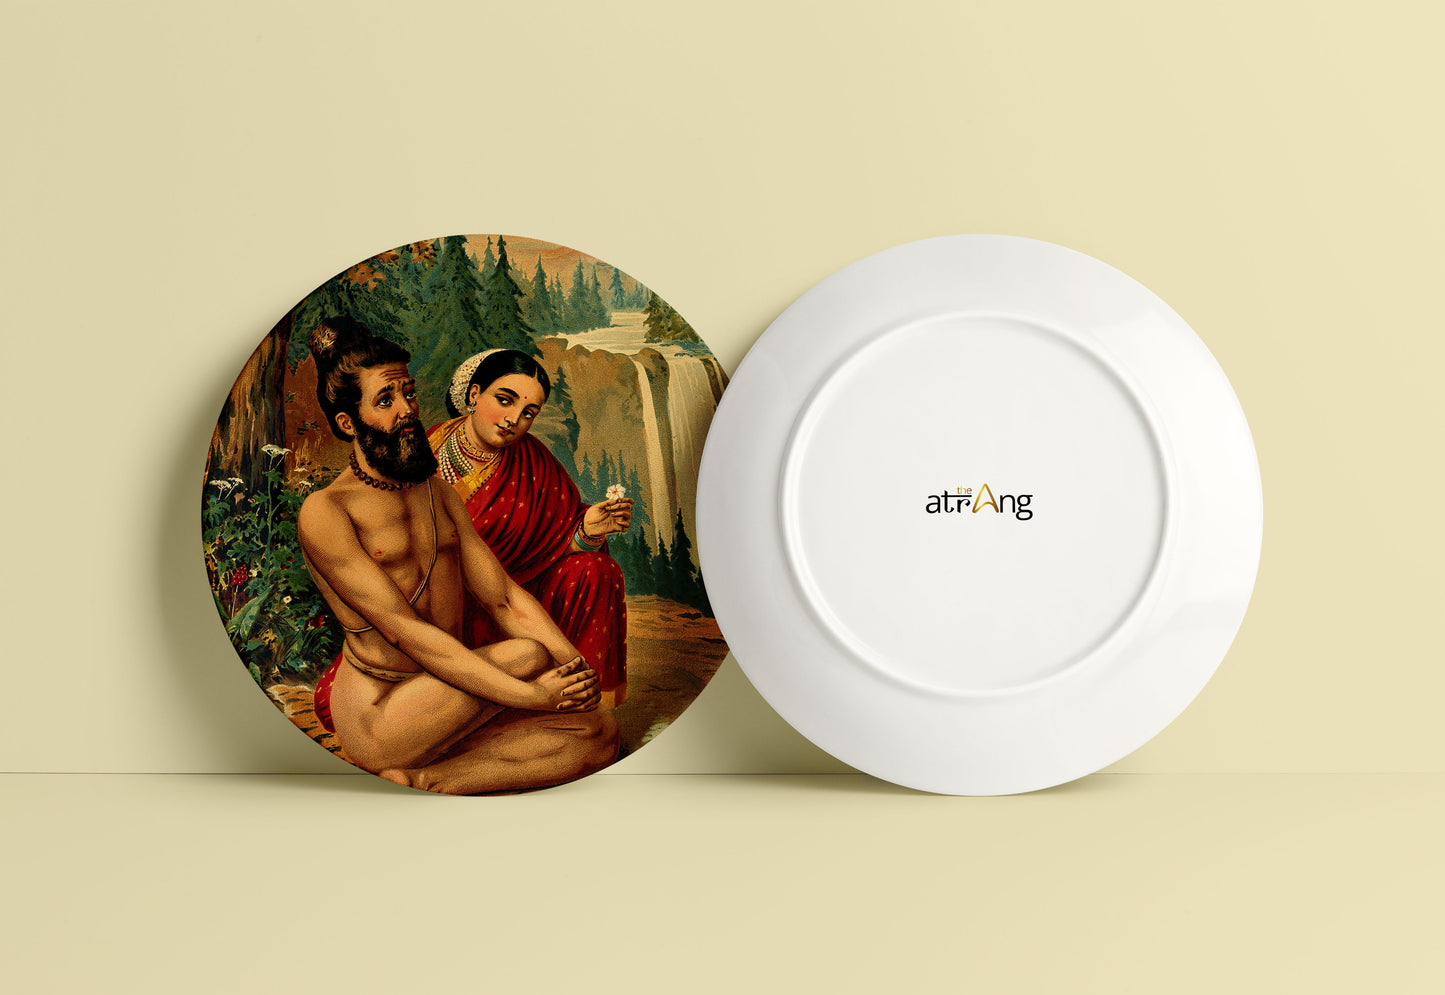 Menaka the nymph tempting the yogi, Vishwamitra by Ravi Varma Ceramic Plate for Home Decor